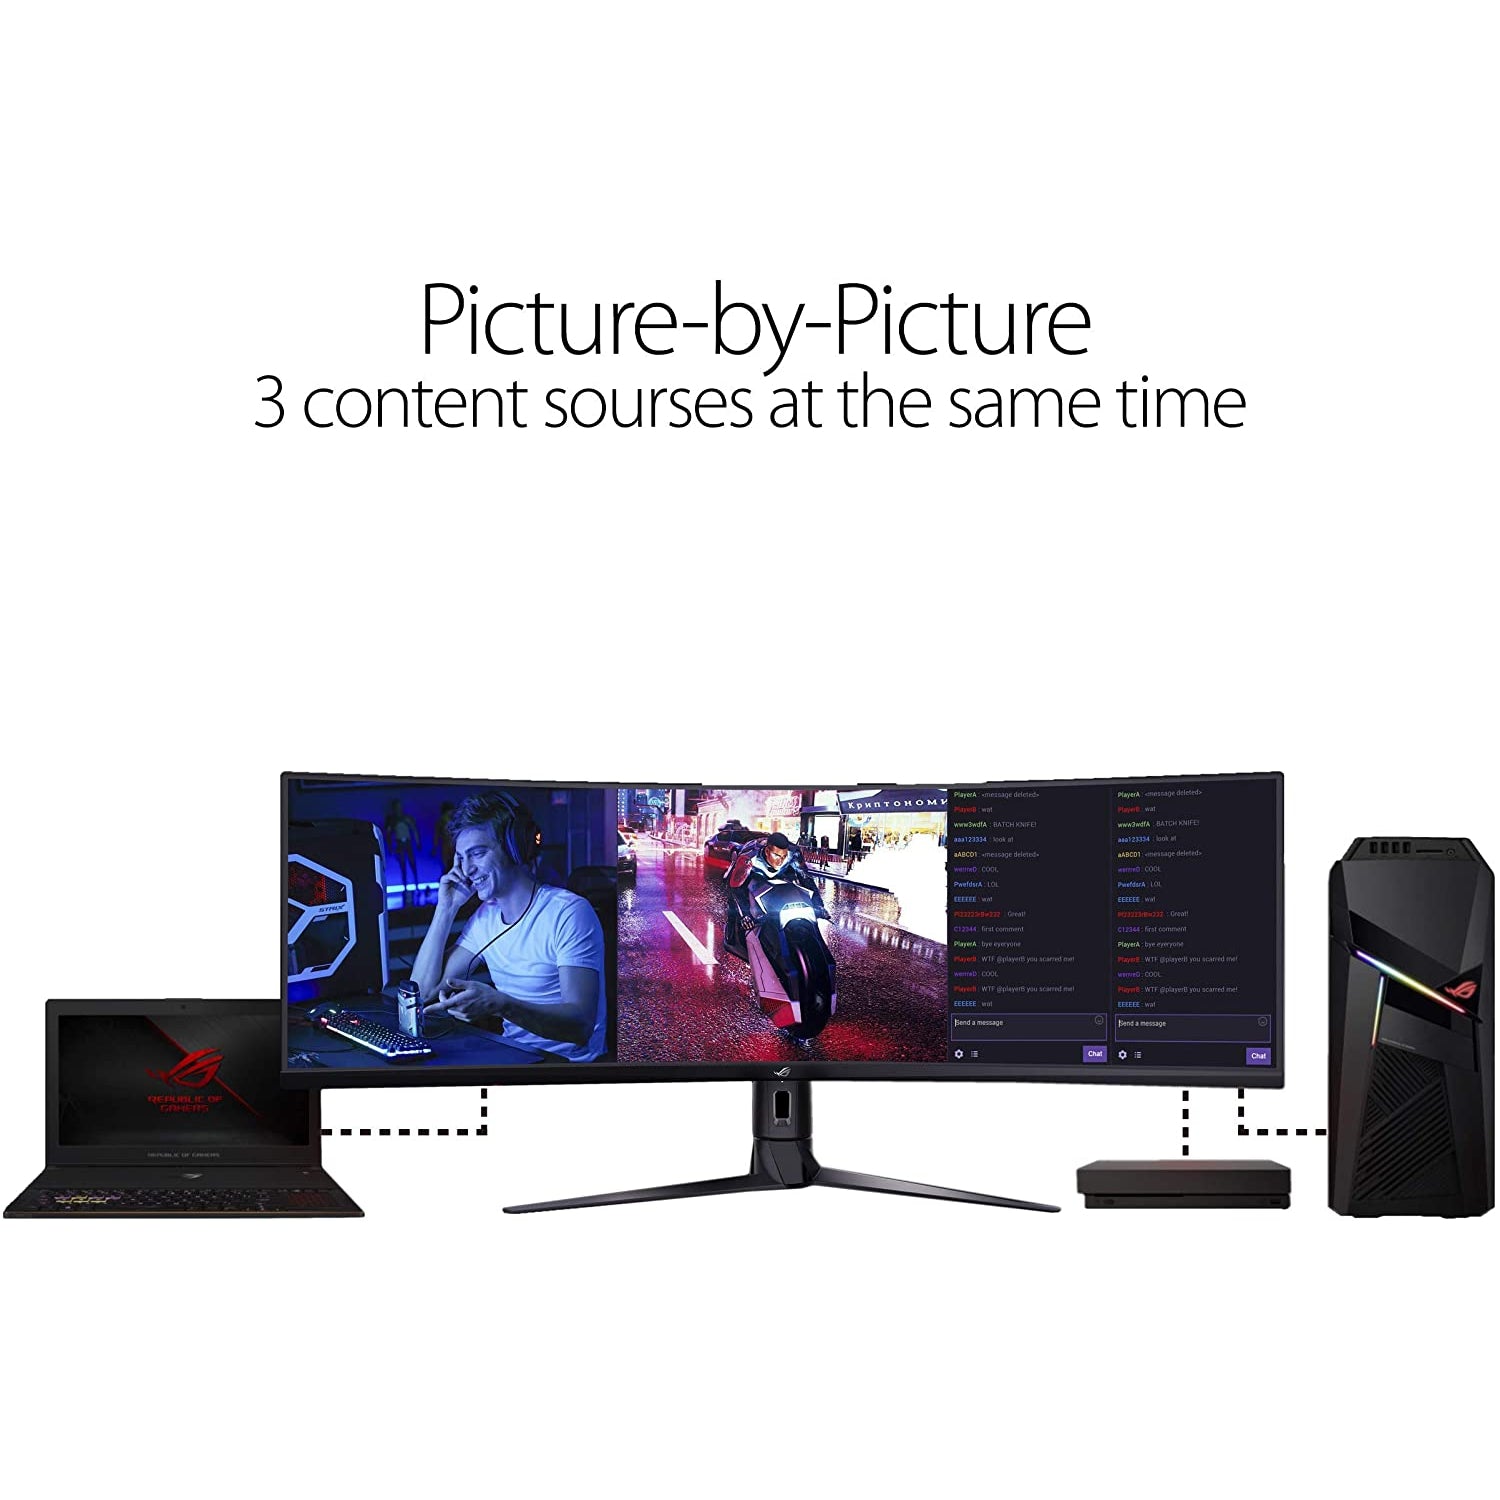 ASUS ROG STRIX Curved XG49VQ, 49 Inch DFHD (3840x1440) Gaming monitor, VA, up to 144Hz, 125% sRGB, DP, HDMI, USB3.0, FreeSync 2 HDR